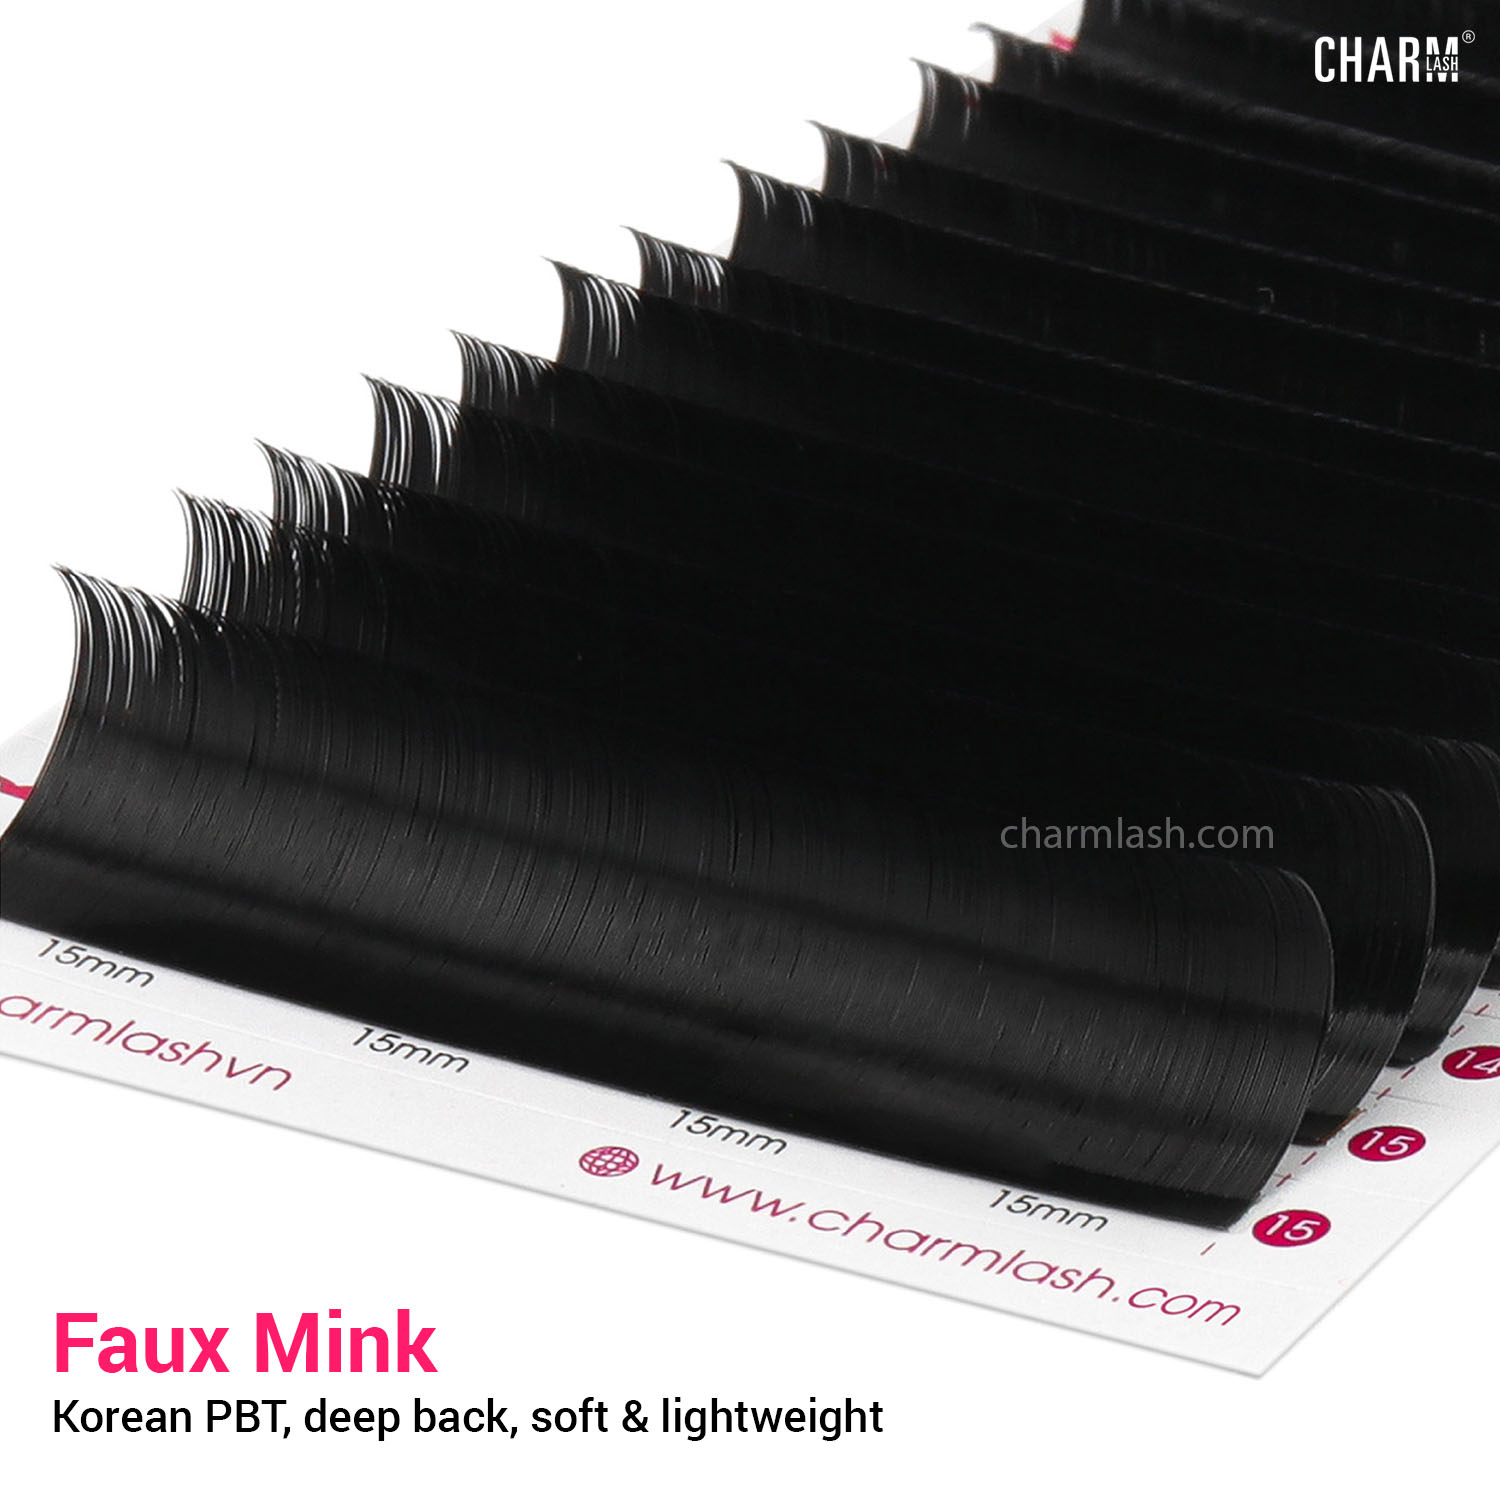 Faux Mink - Charmlash